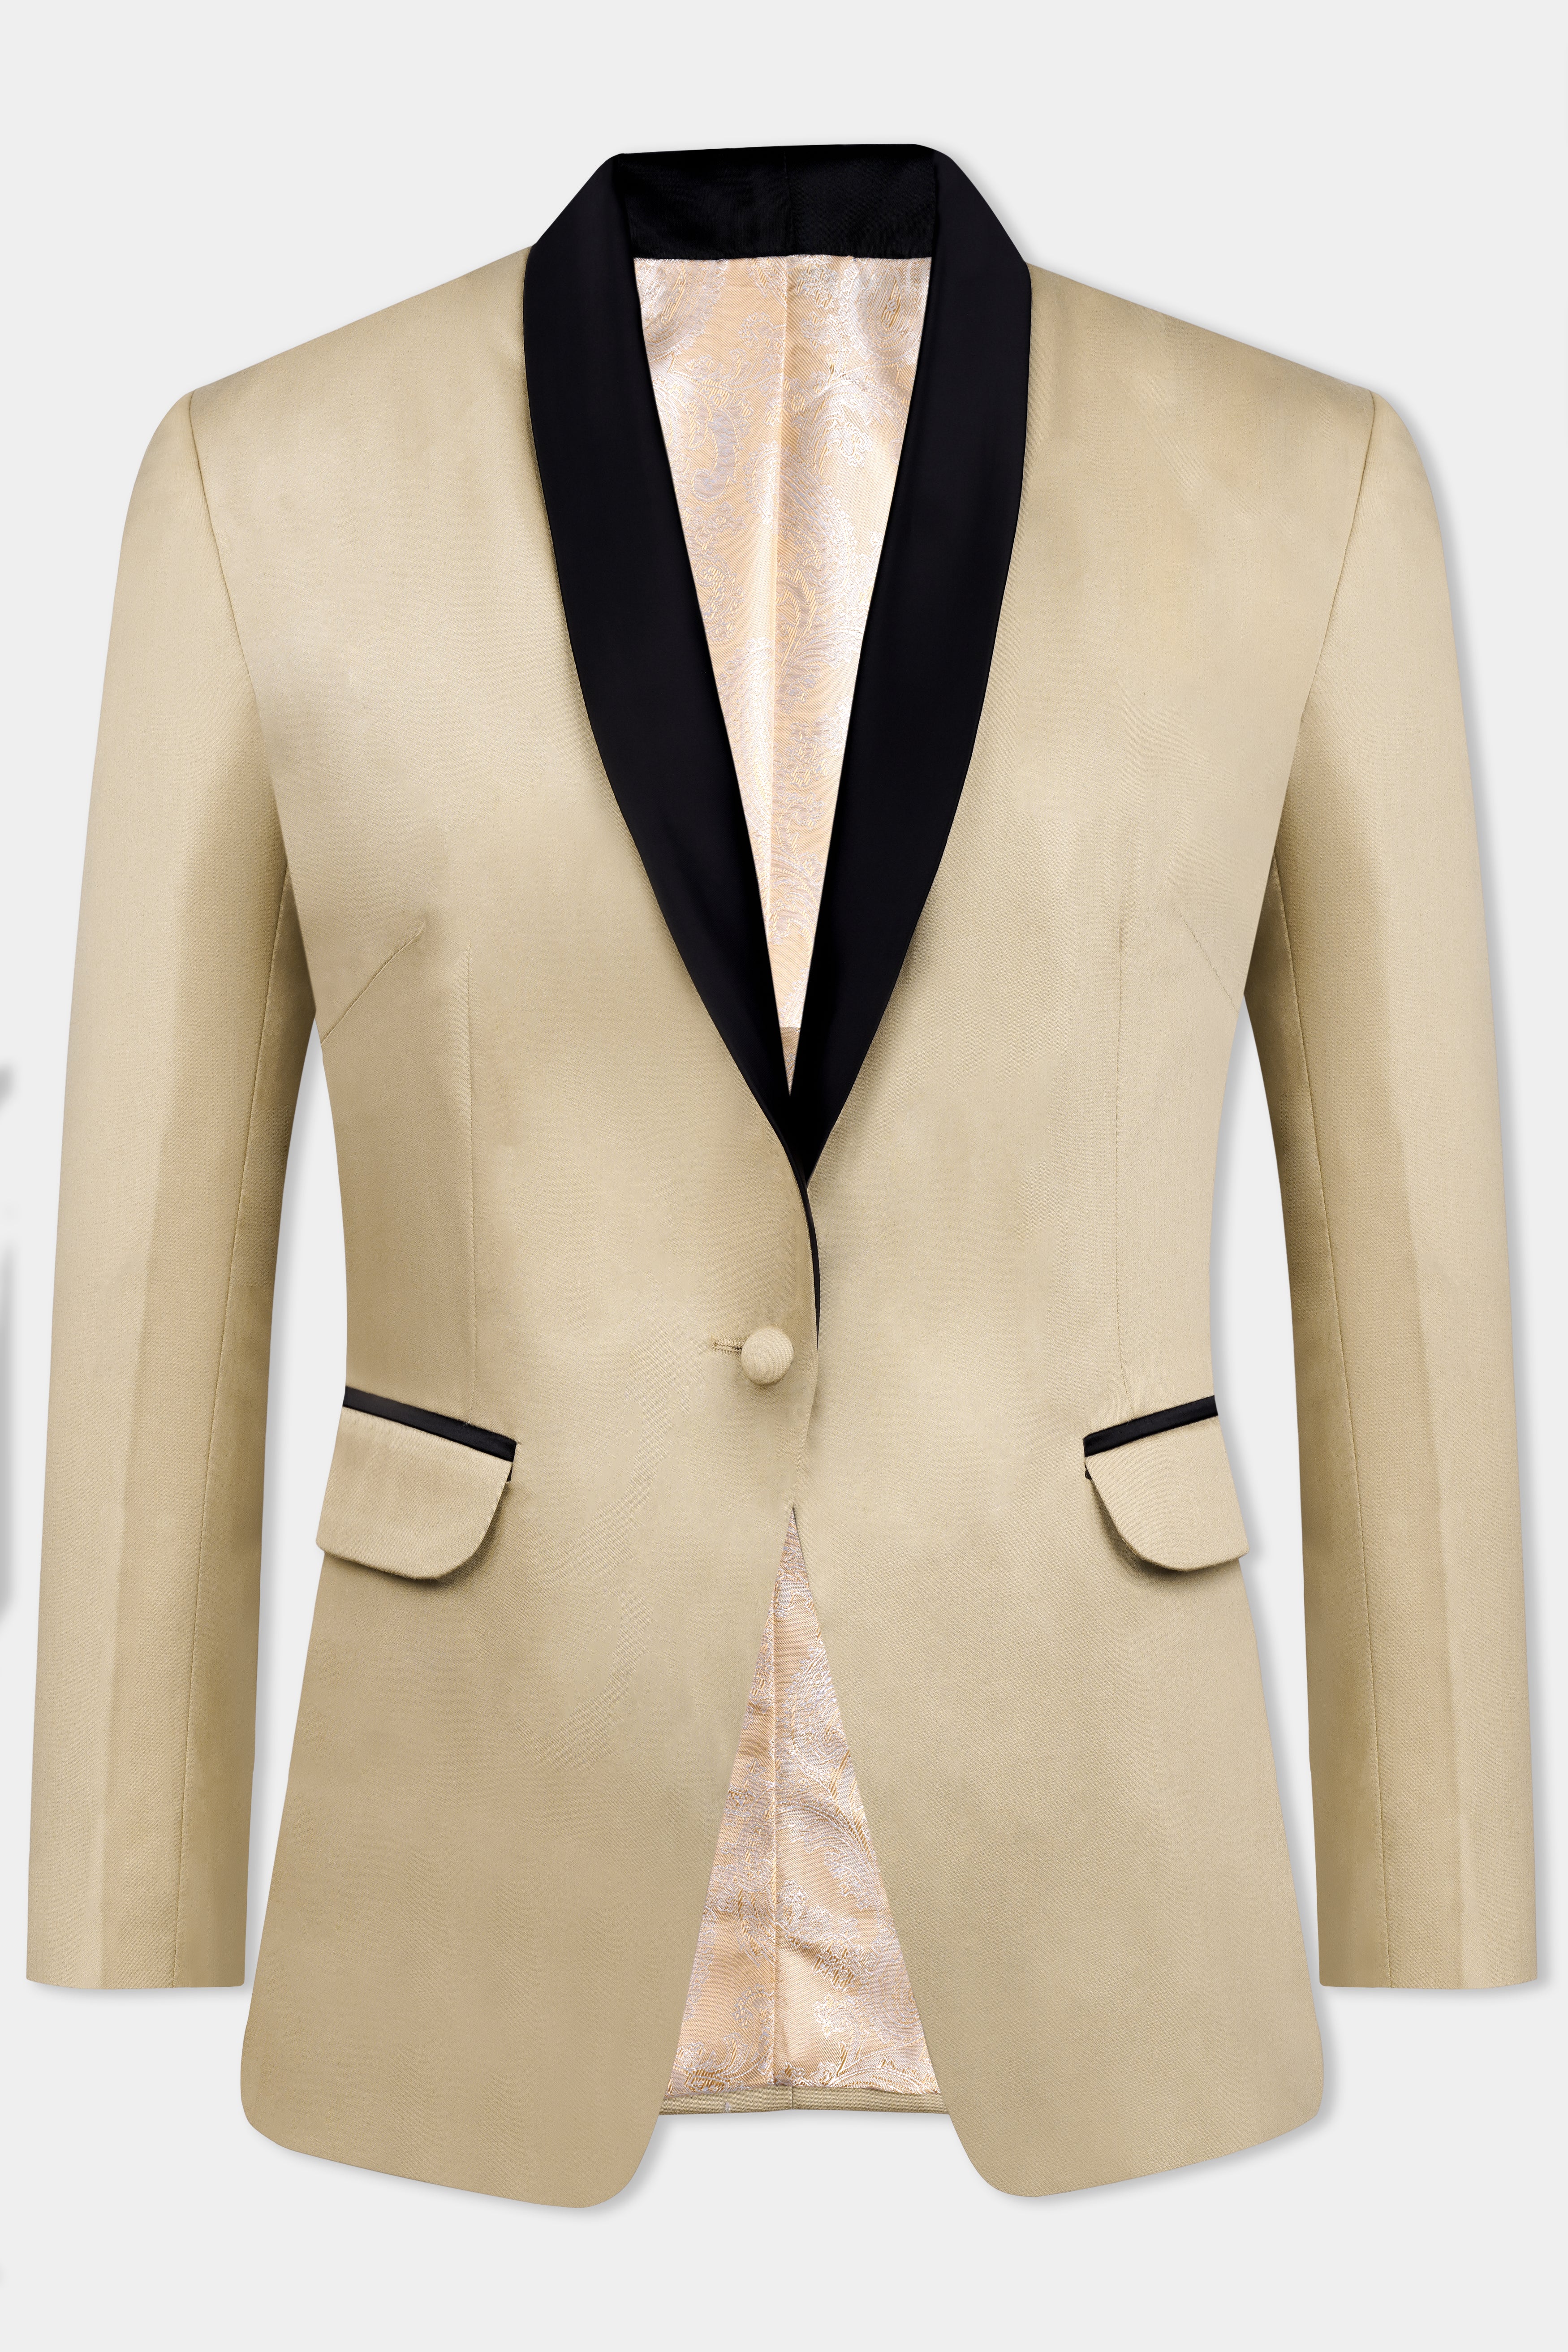 Hazelnut Cream Subtle Sheen with Black Lapel Single Breasted Women's Suit